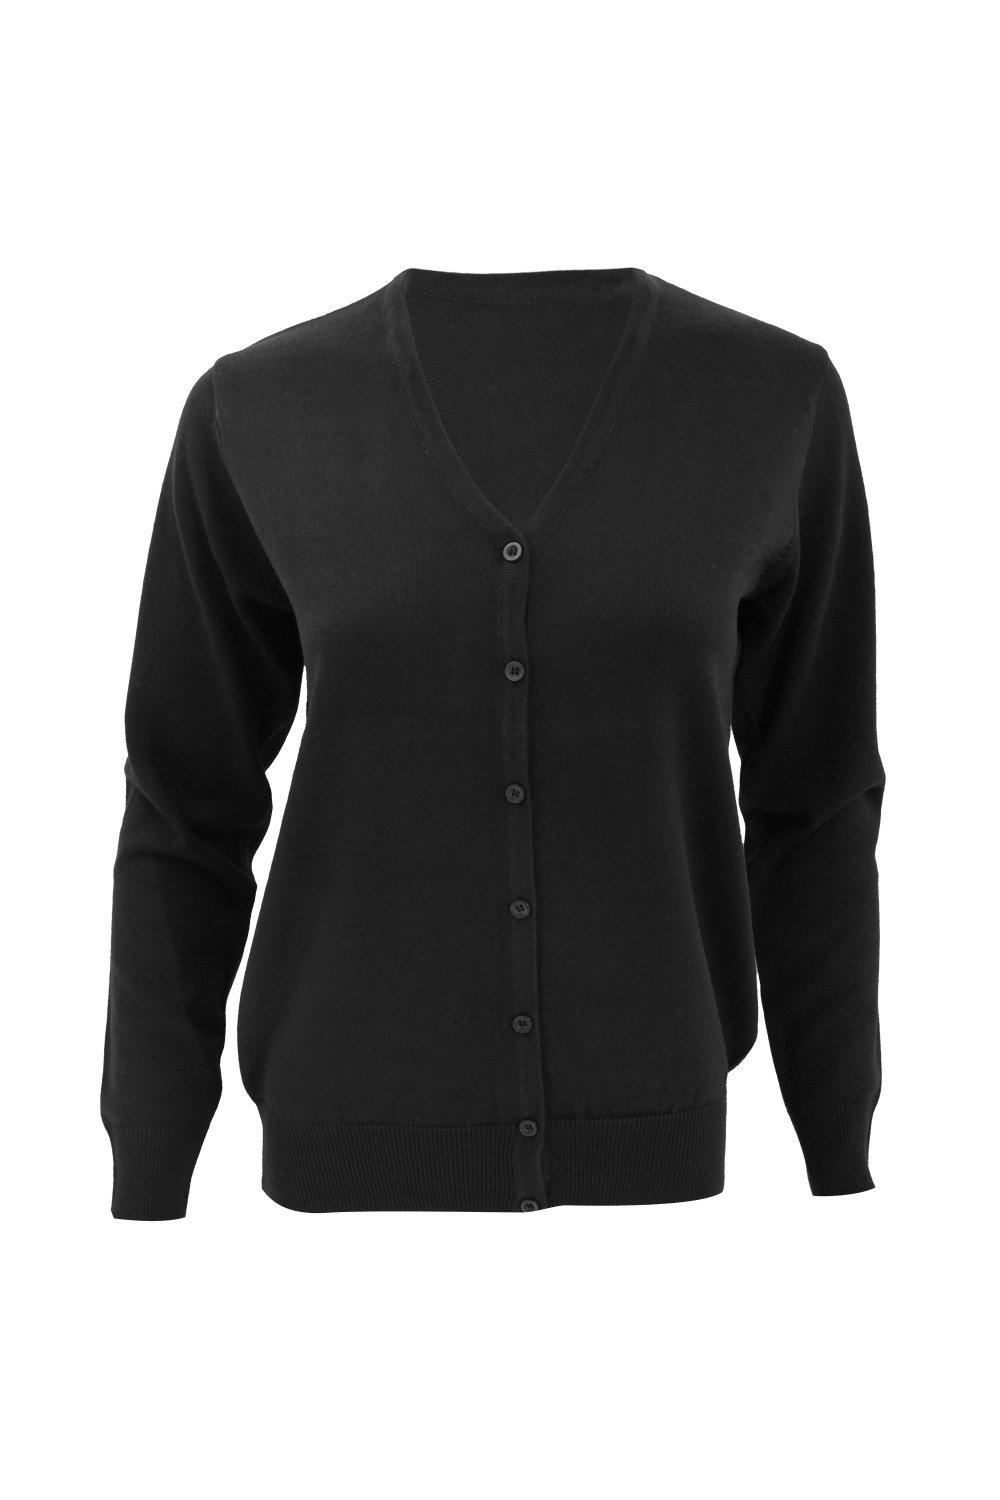 Kustom Kit Women's V-Neck Cardigan / Knitwear|Size: 16|black